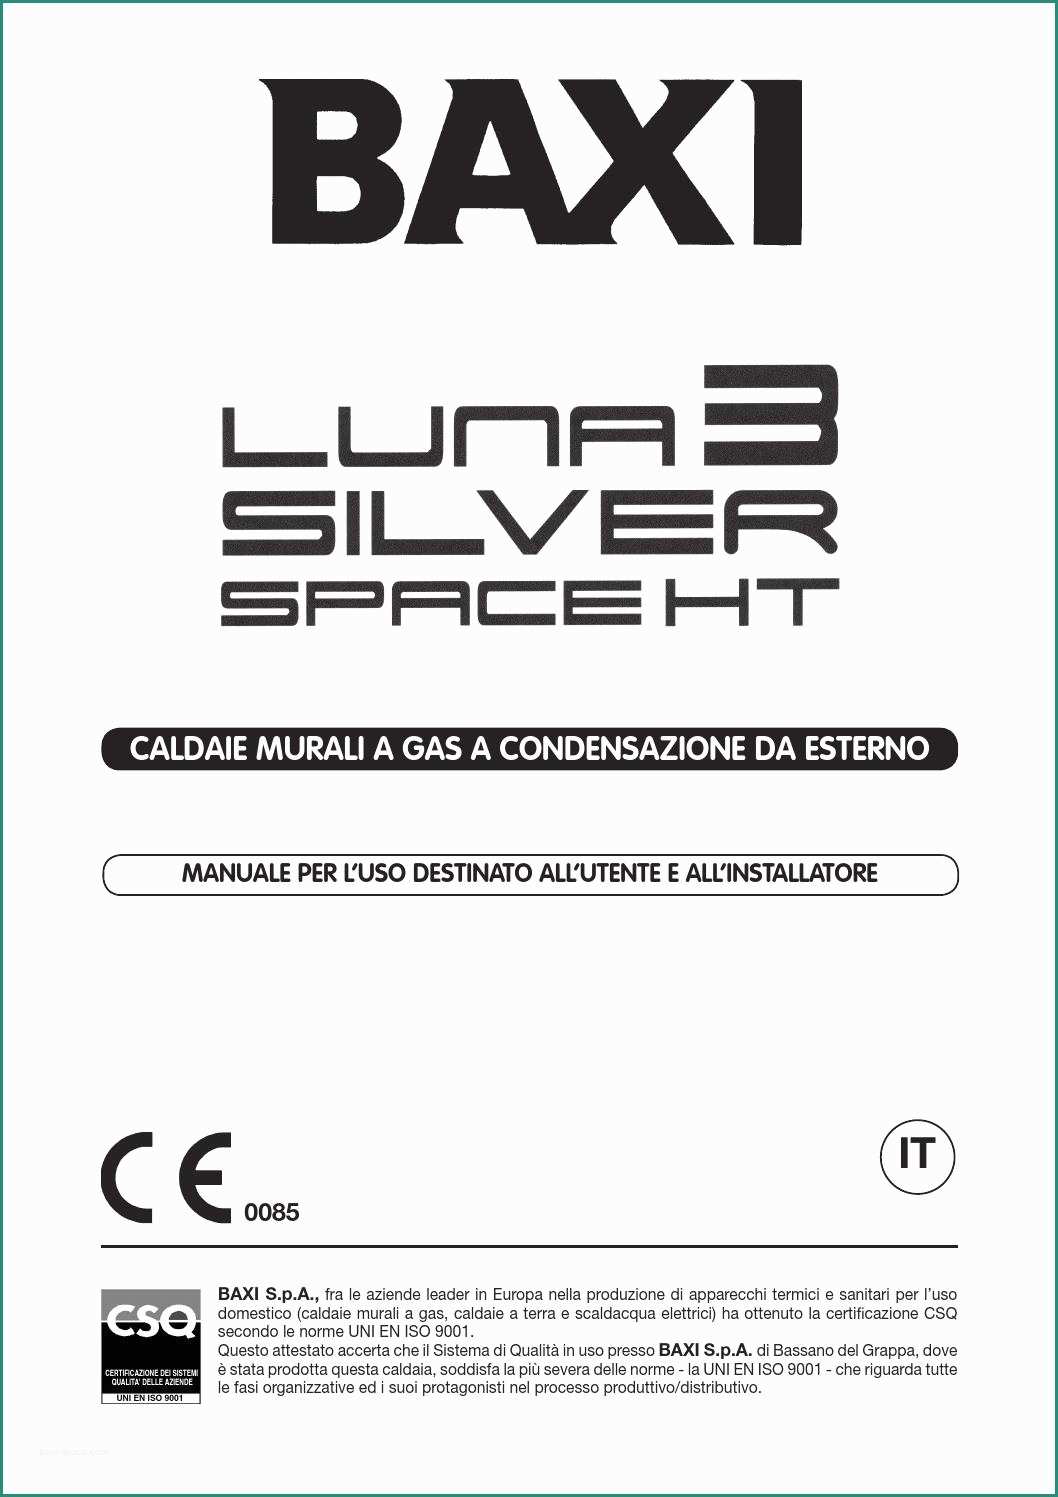 Istruzioni Caldaia Baxi Luna E Manuale Luna 3 Silver Space Ht Baxi by Baxi Spa issuu